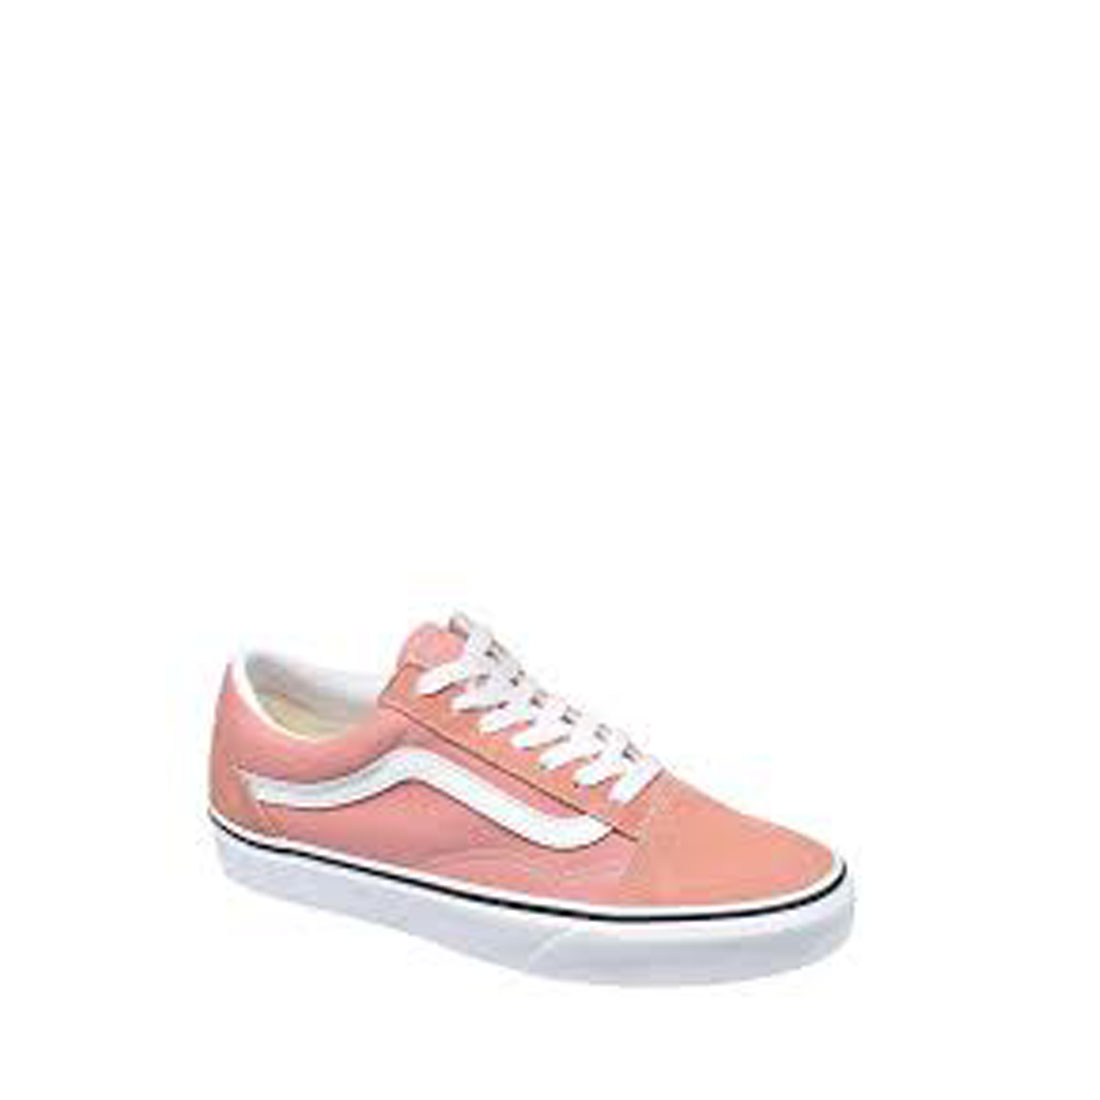 Vans Old Skool Unisex/Adult shoe size Men 4/Women 5.5  Casual VN0A38G11UL Pink - image 1 of 1